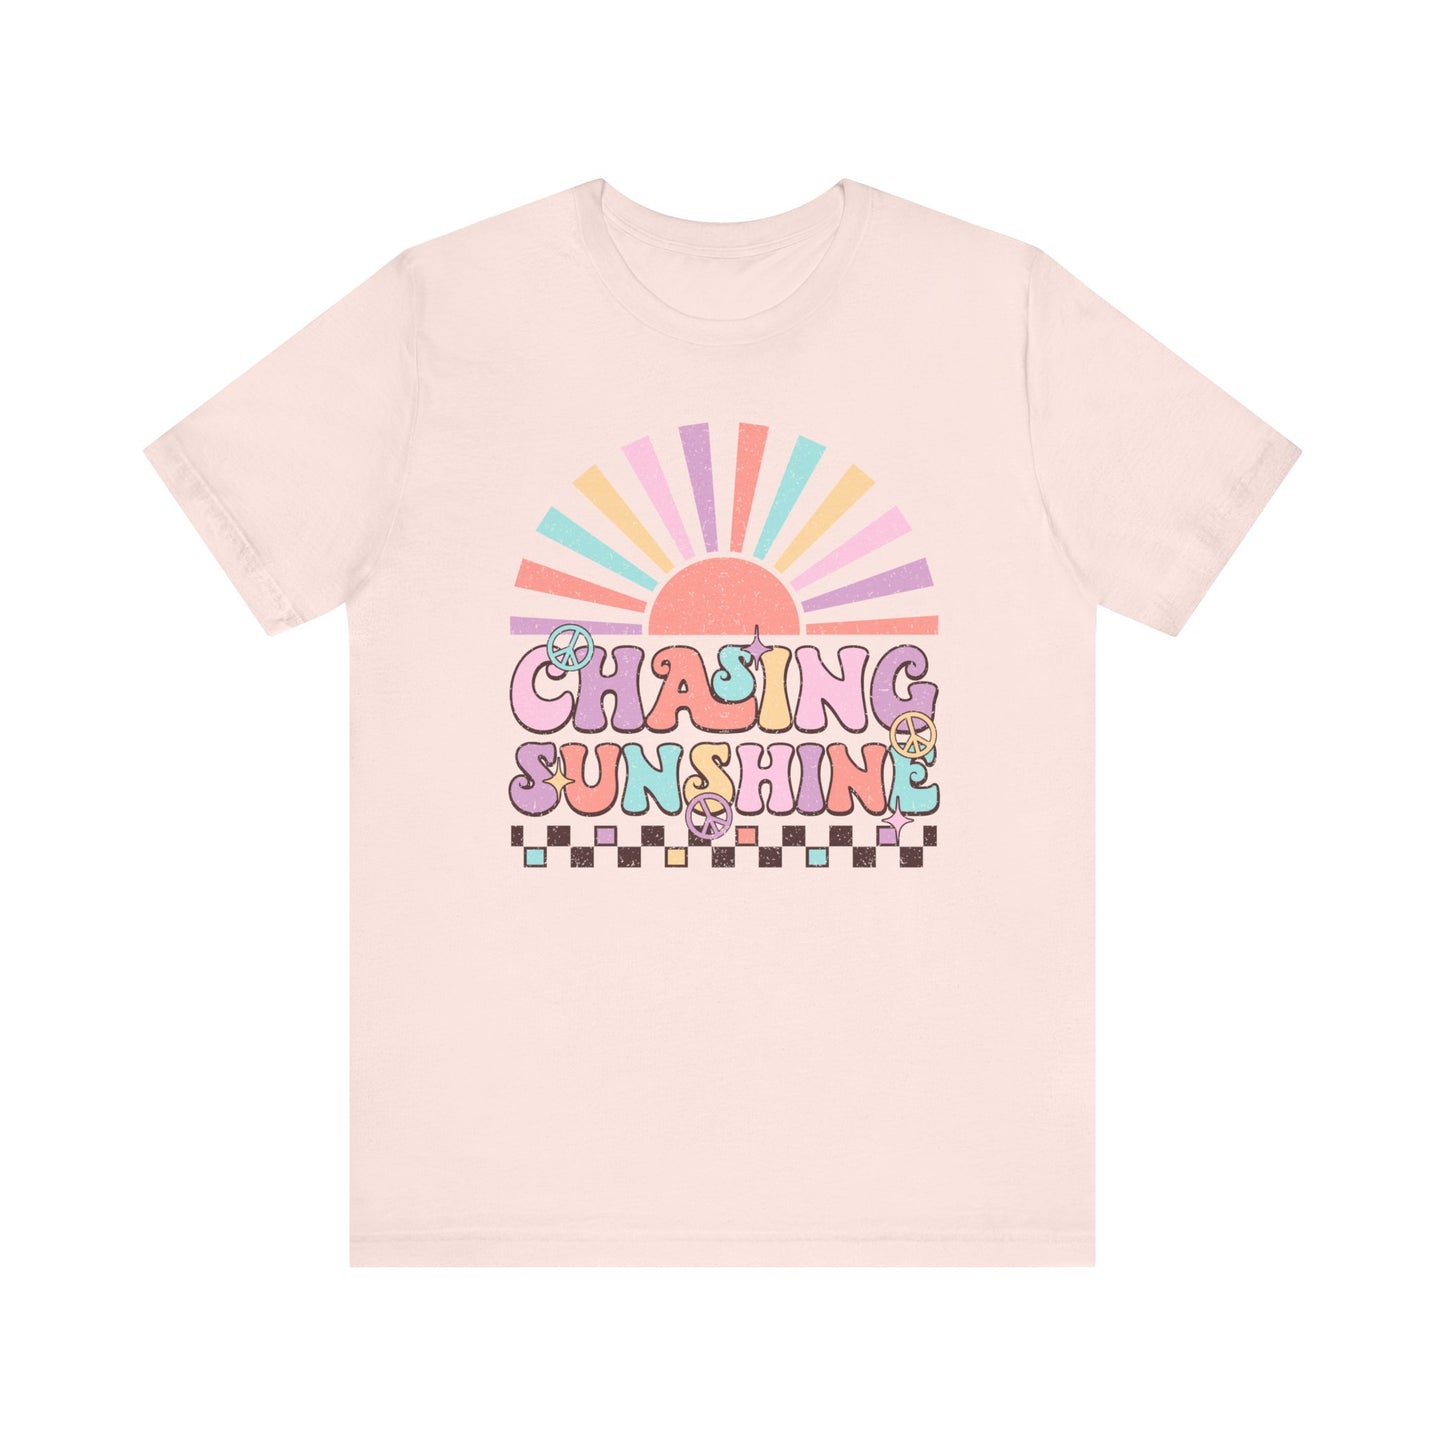 Retro Chasing Sunshine Graphic Tee, Vintage Inspired Sunset Design, Casual Summer Fashion Unisex T-Shirt